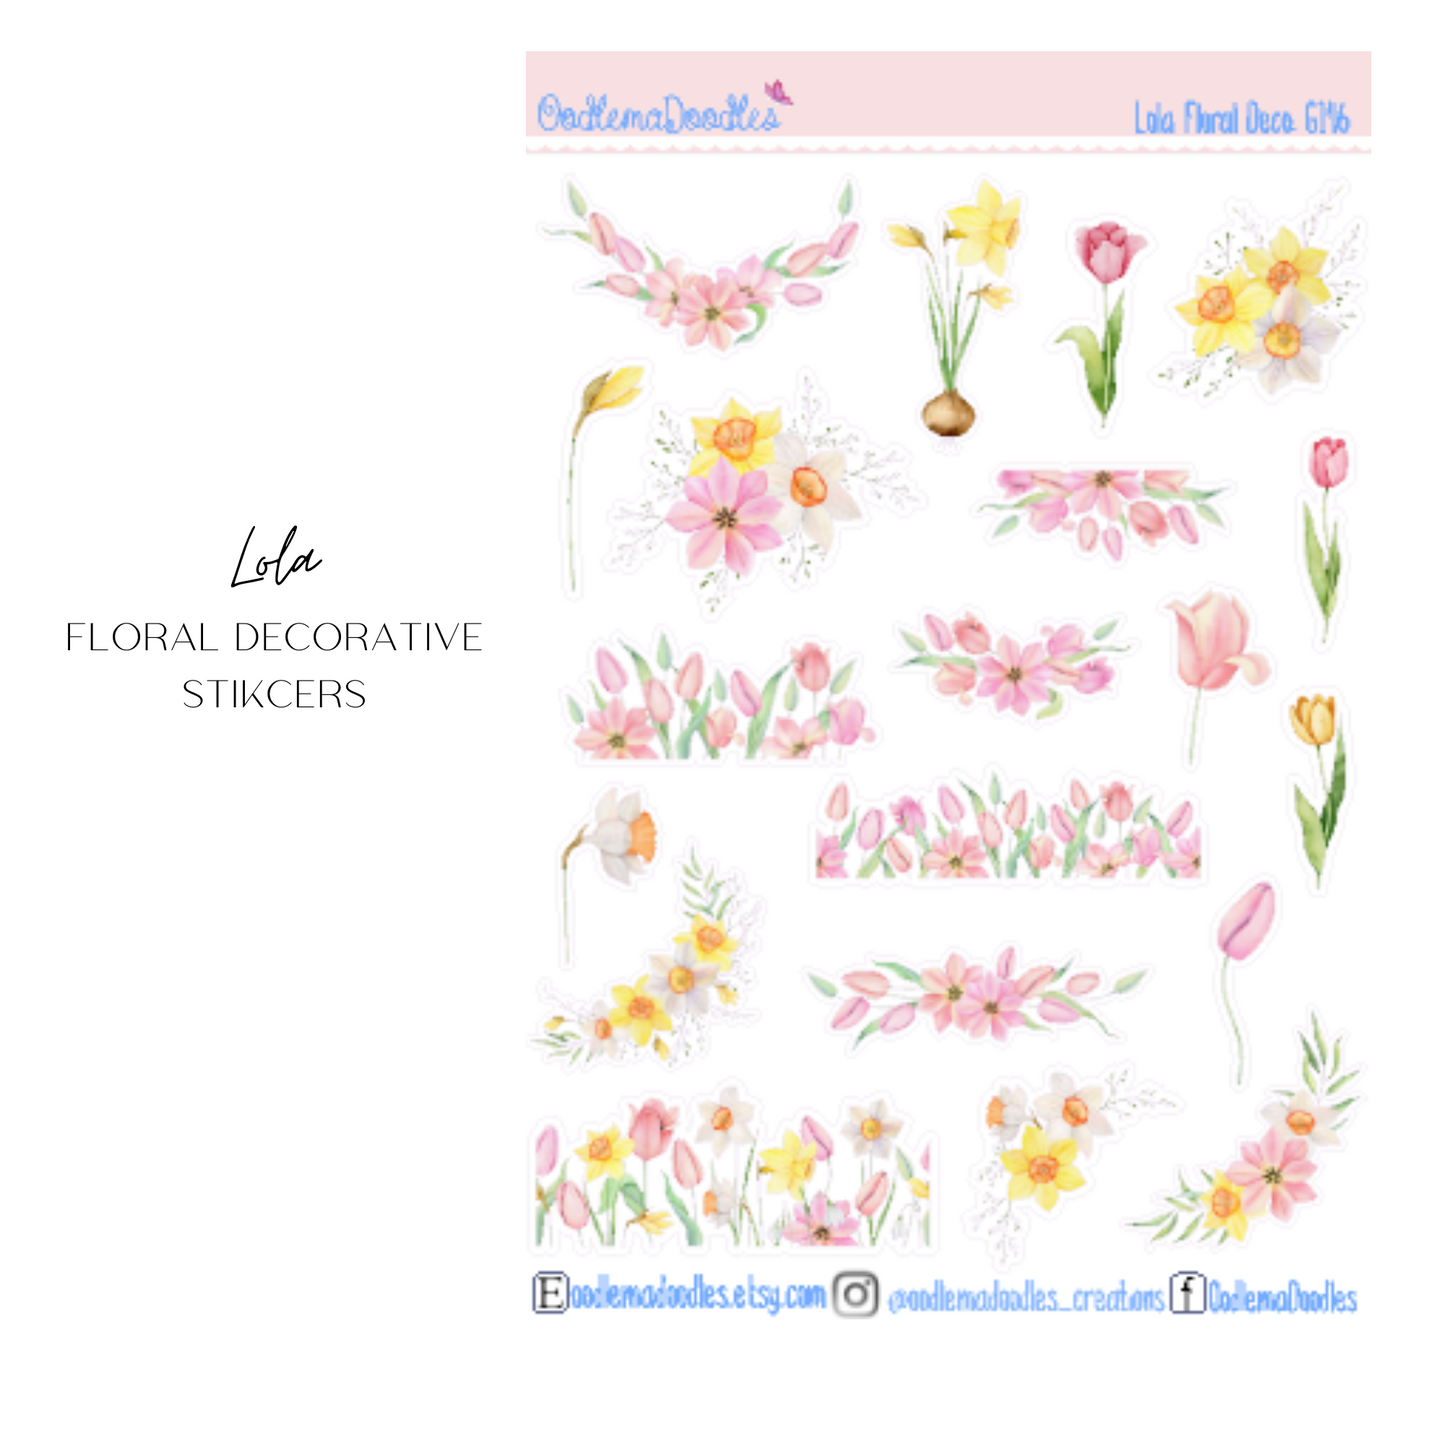 Lola Floral Decorative Stickers